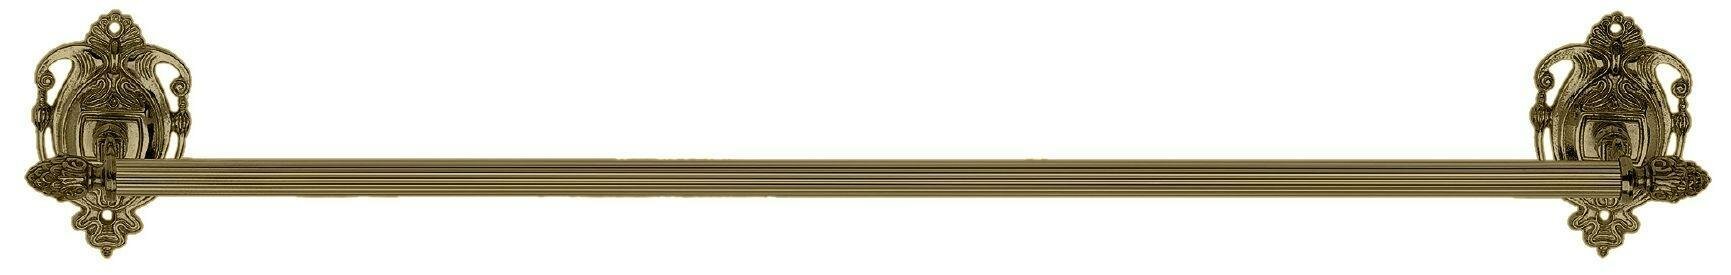 Полотенцедержатель 40 см Art&Max IMPERO AM-1226-Br бронза